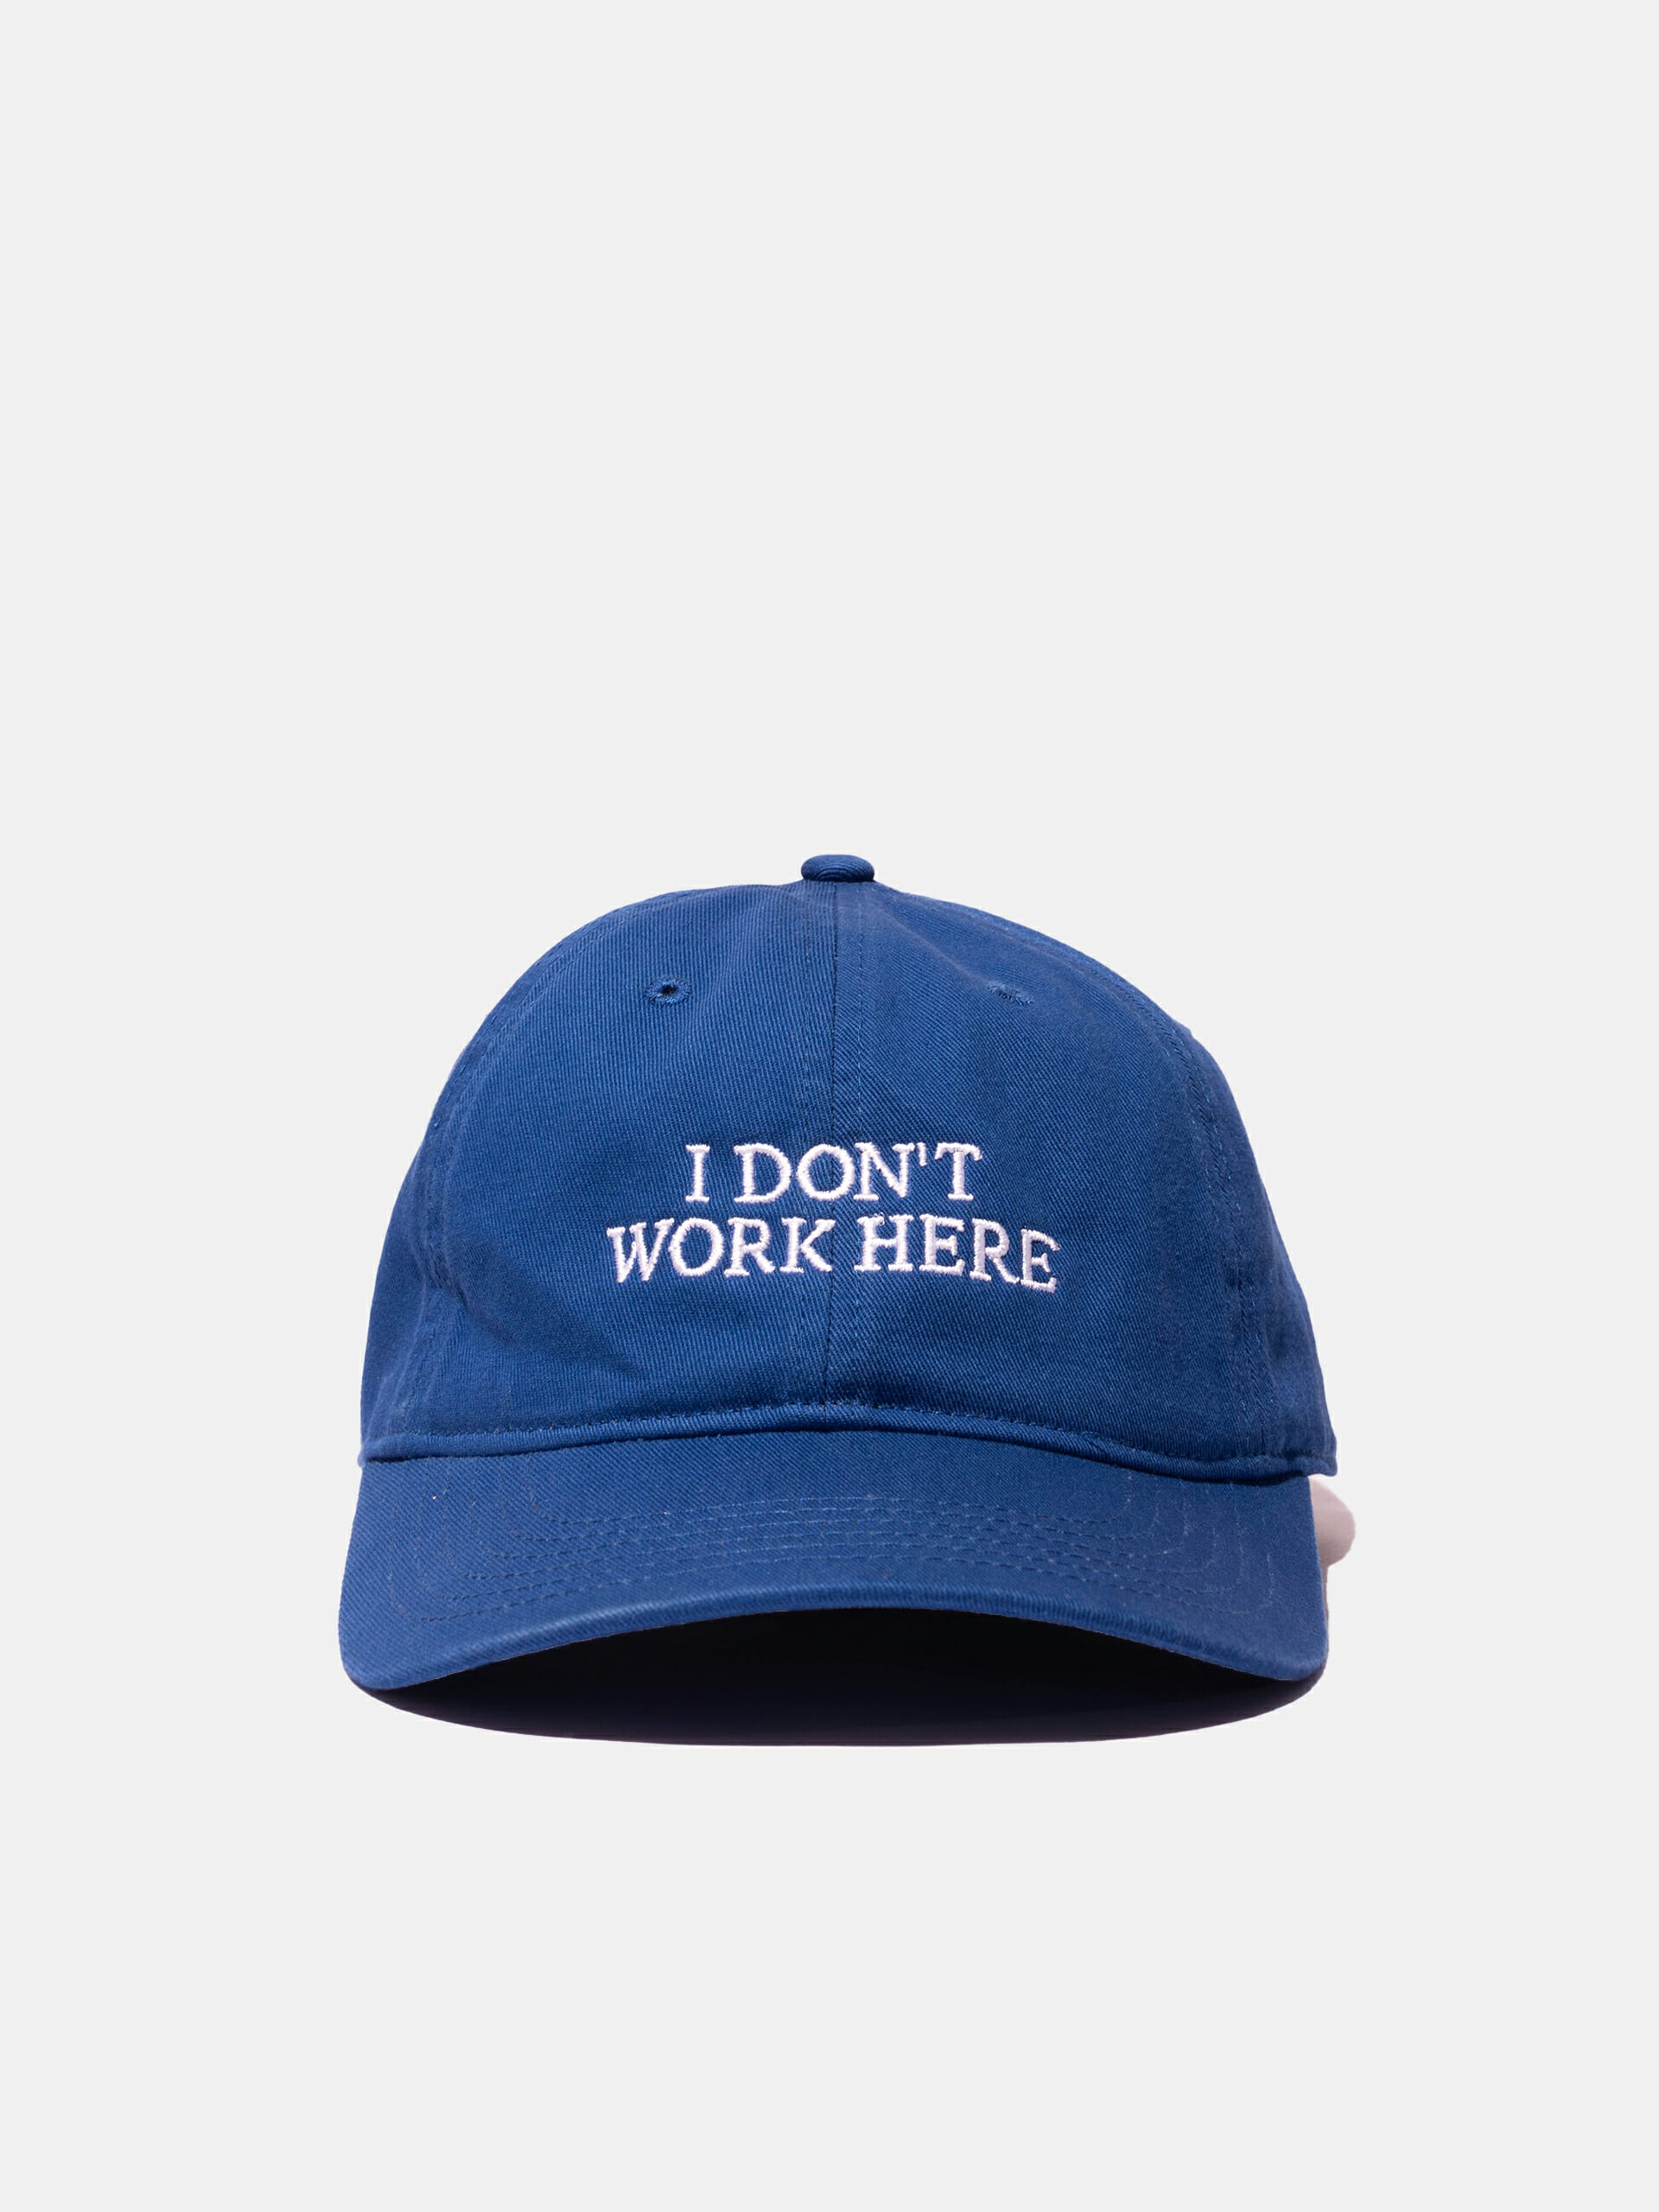 IDEA SORRY / I DON’T WORK HERE HAT / BLUE - NIGHTHAWKS